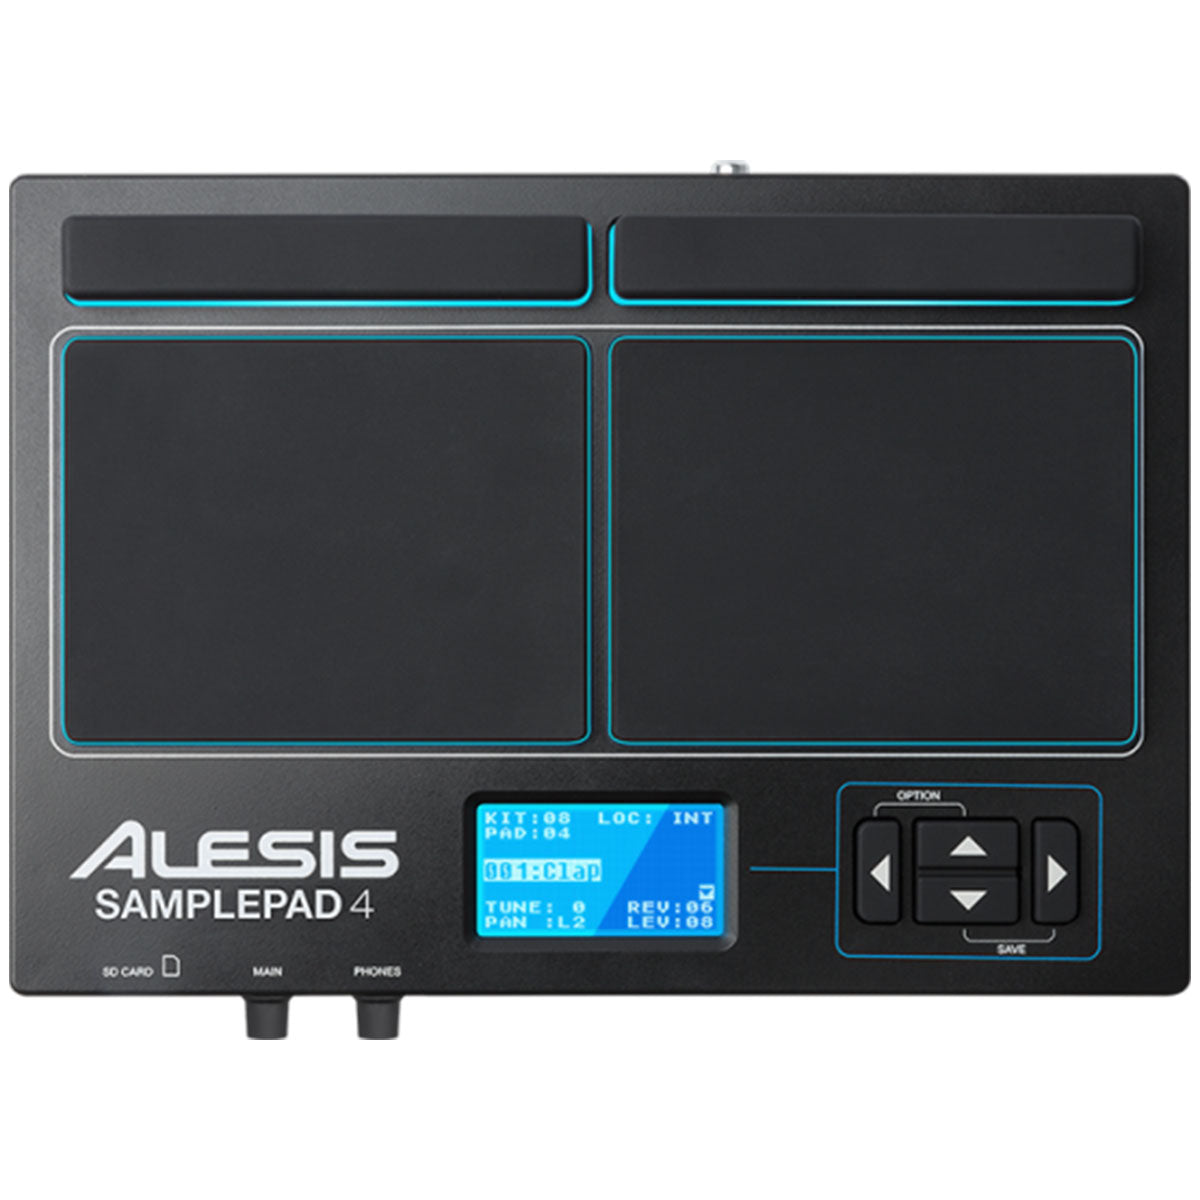 Alesis Samplepad 4 Compact Percussion Pad